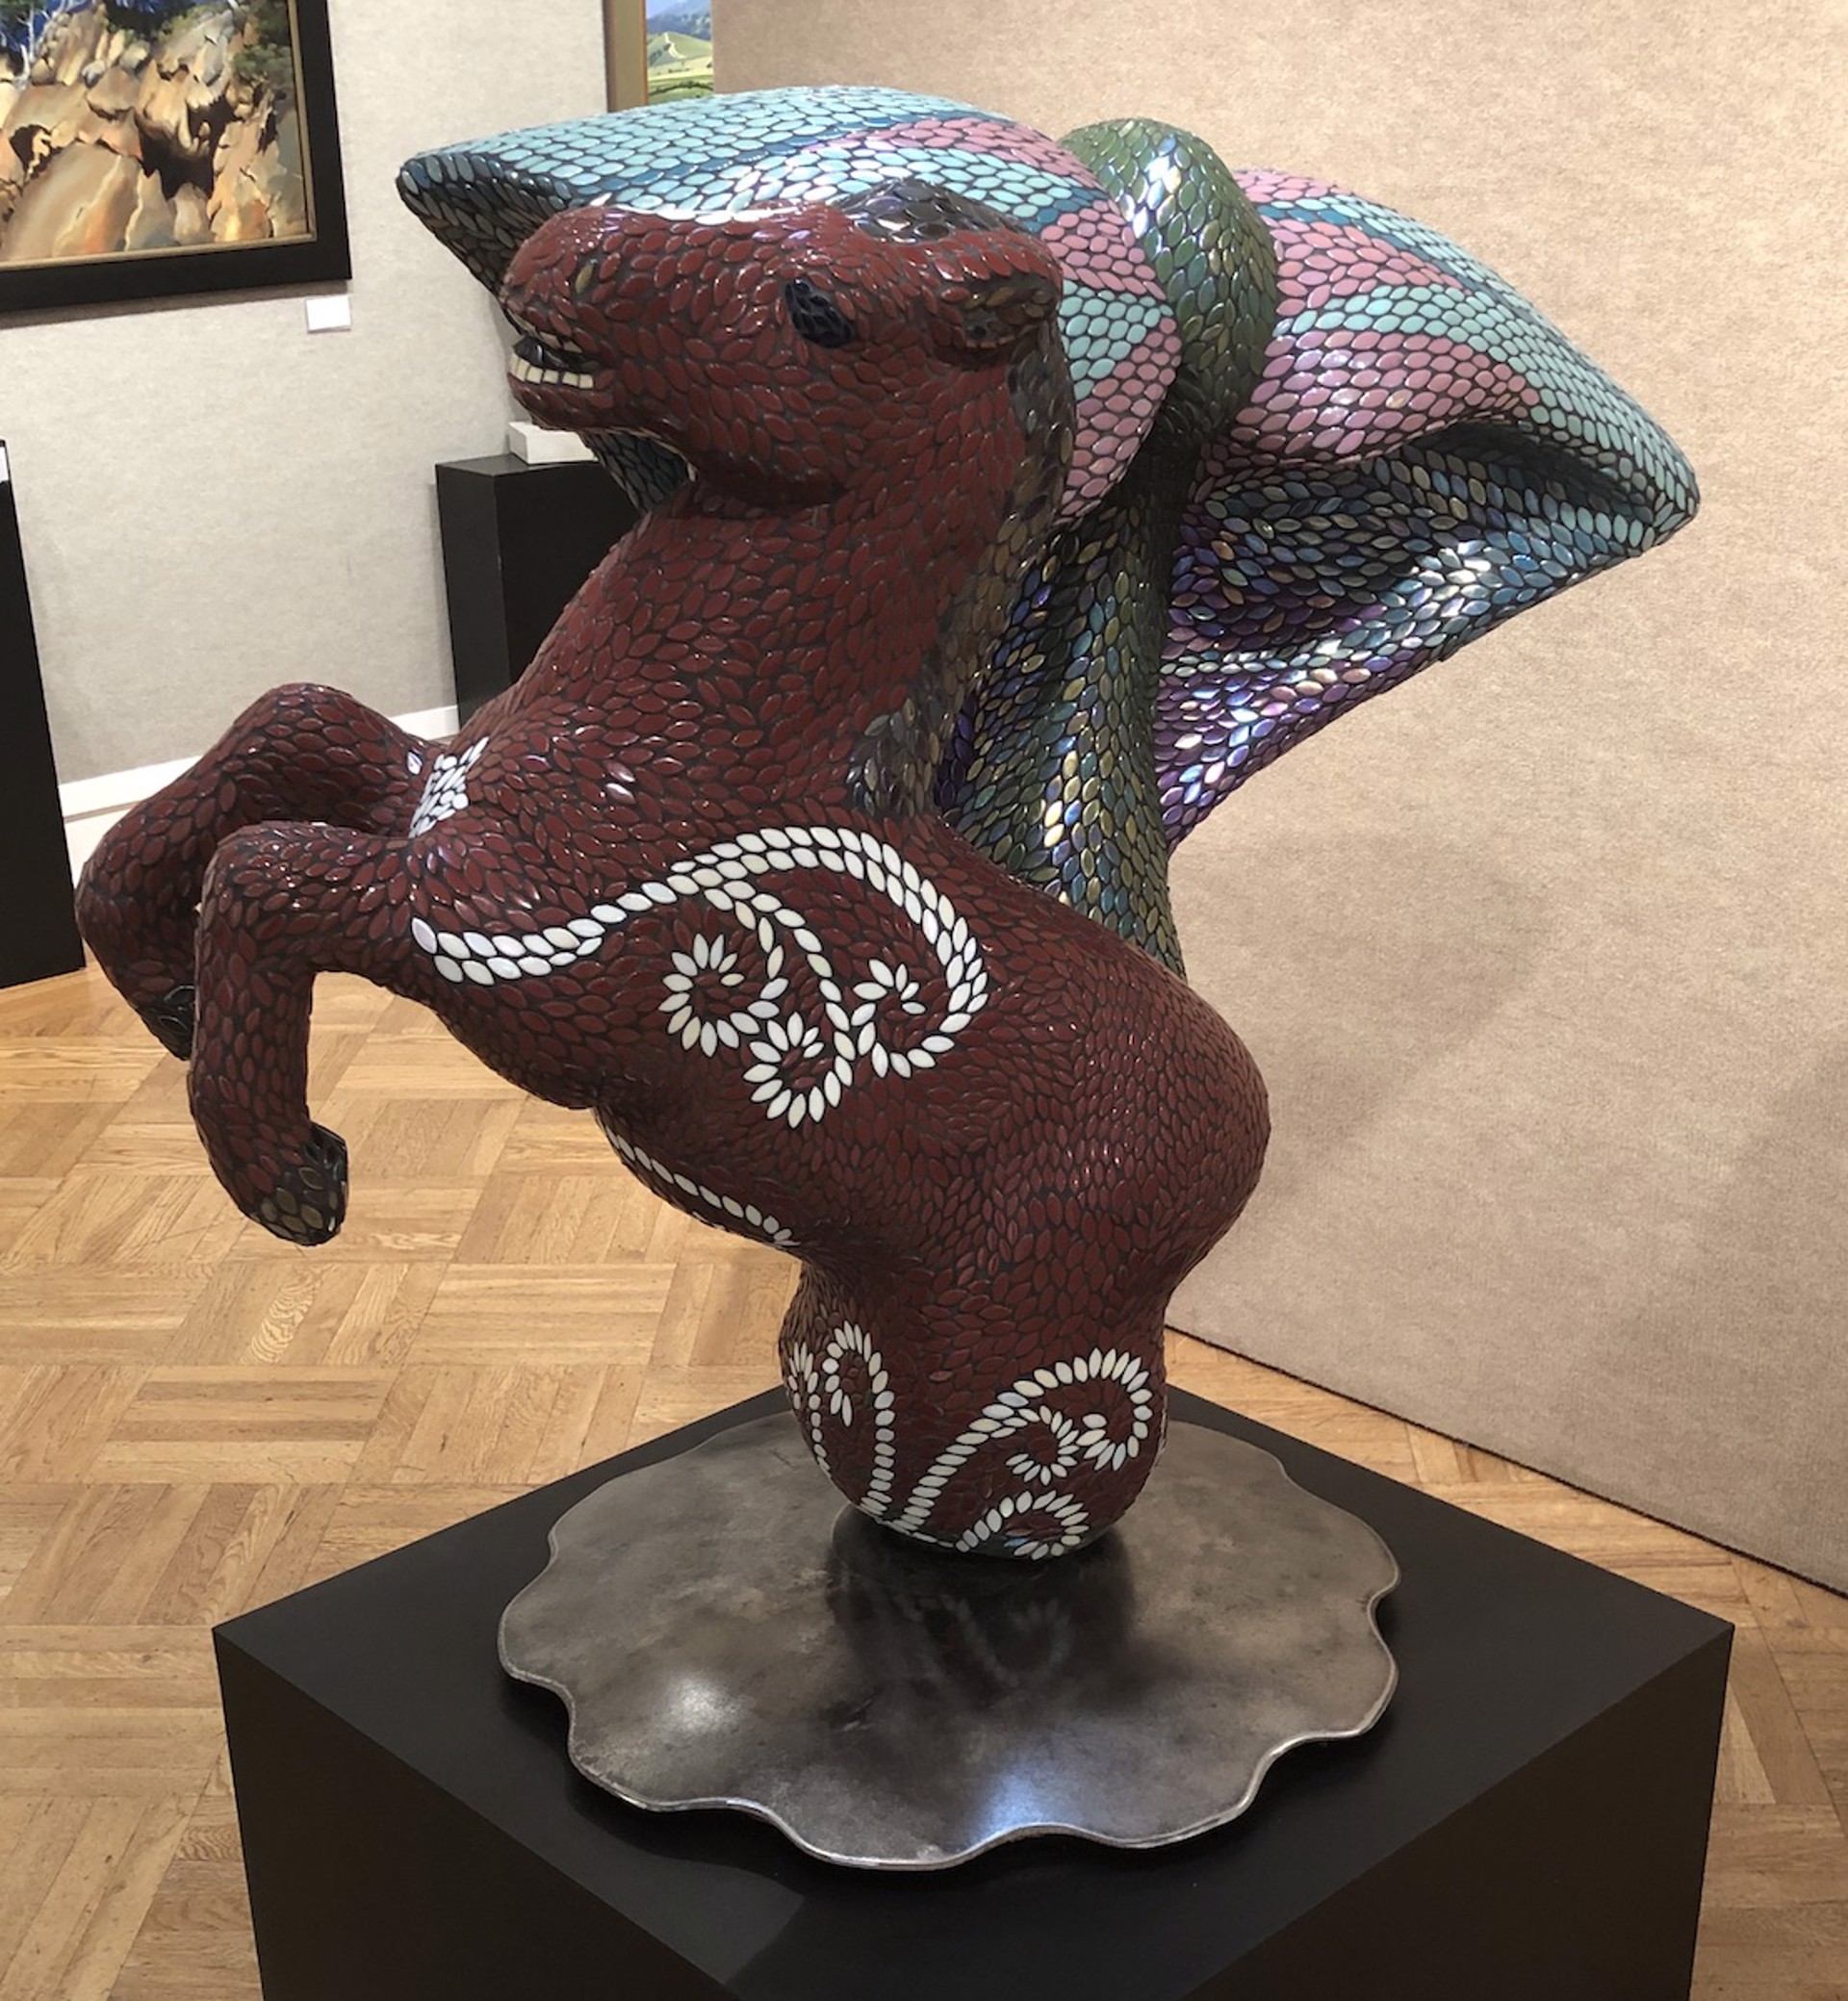 Aviva's Hippocampus by Kathleen Crocetti